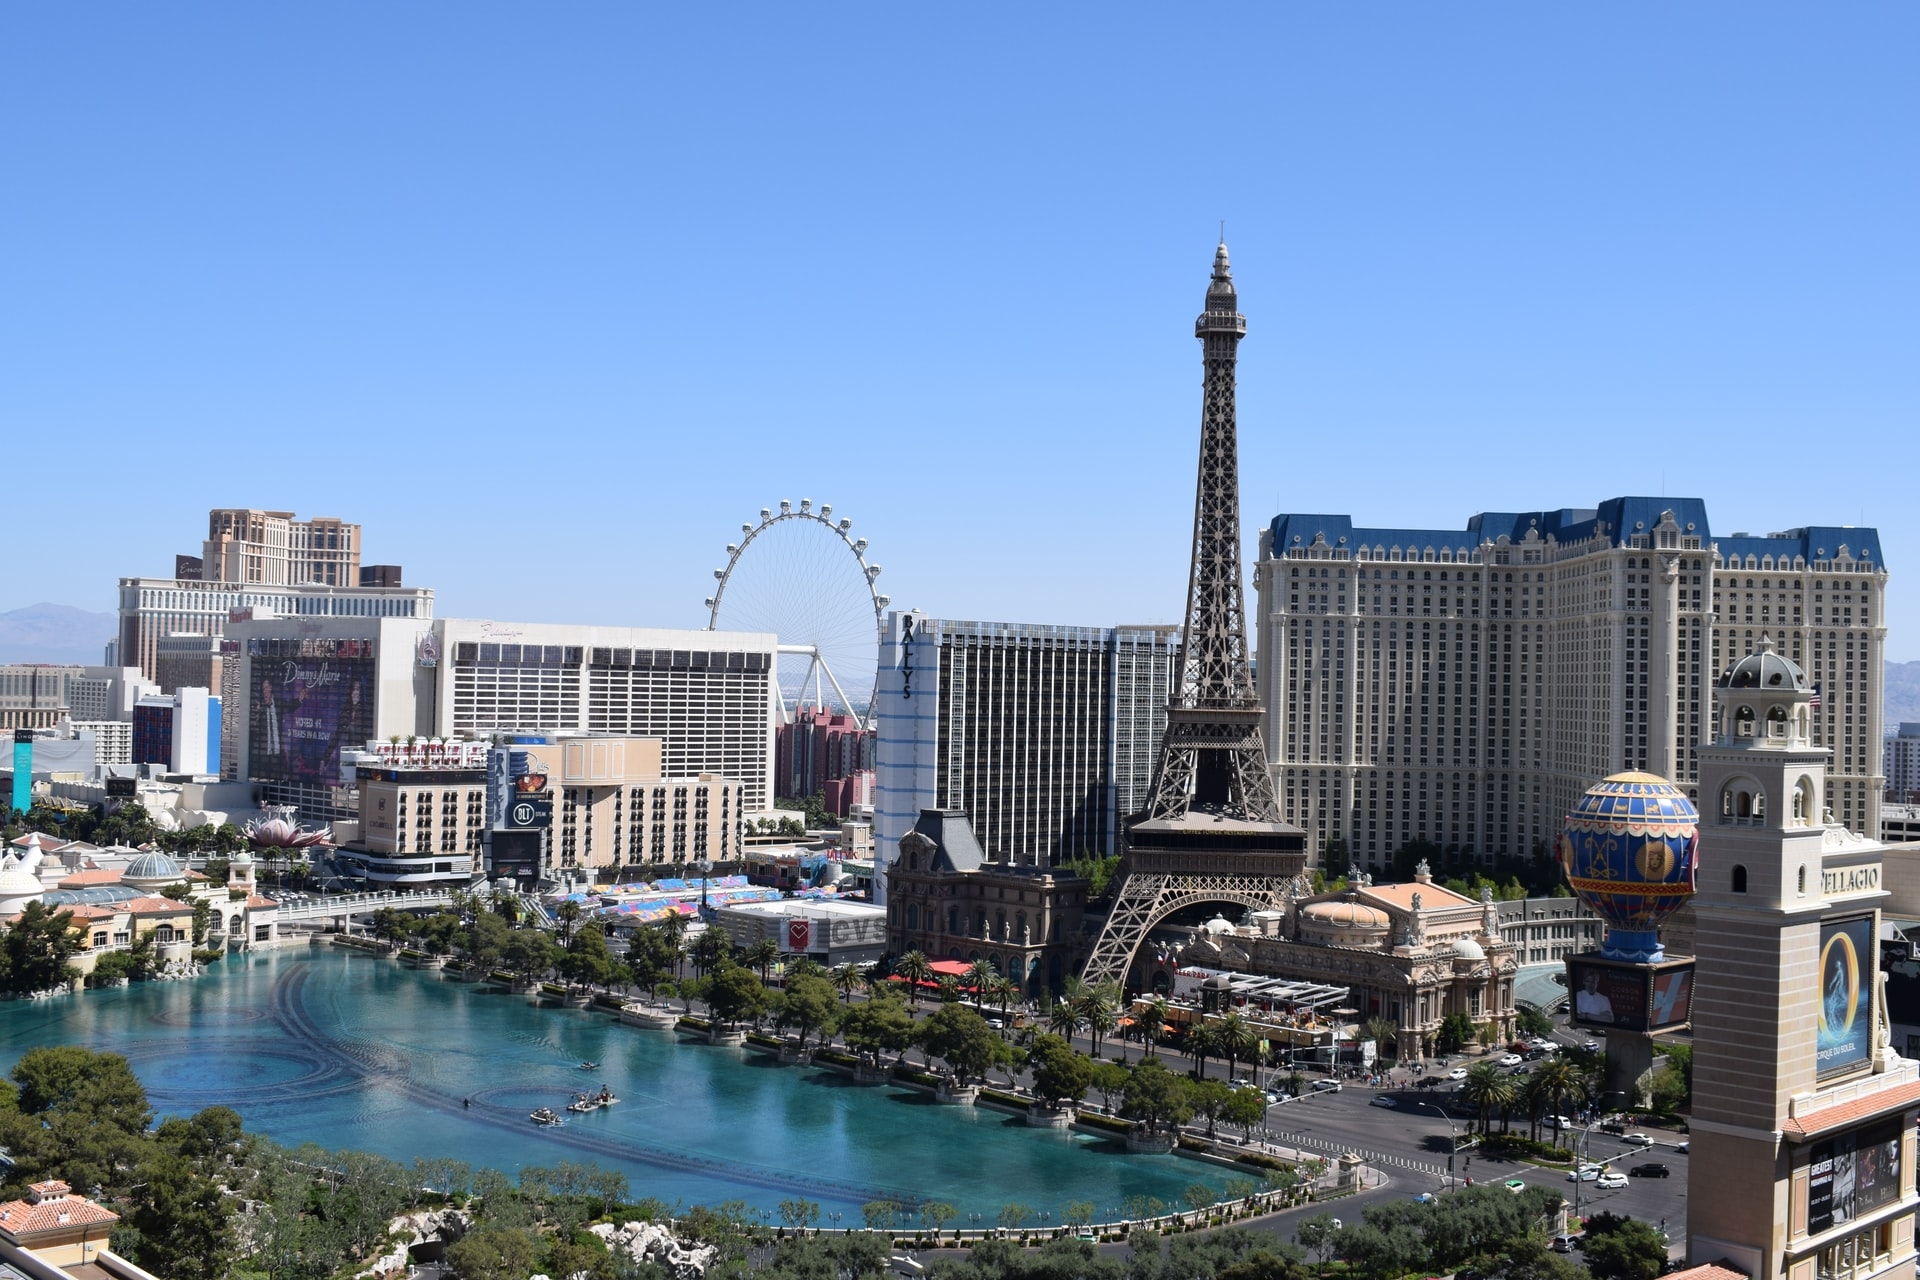 The Las Vegas Experience: Museums, Adventure & Nightlife